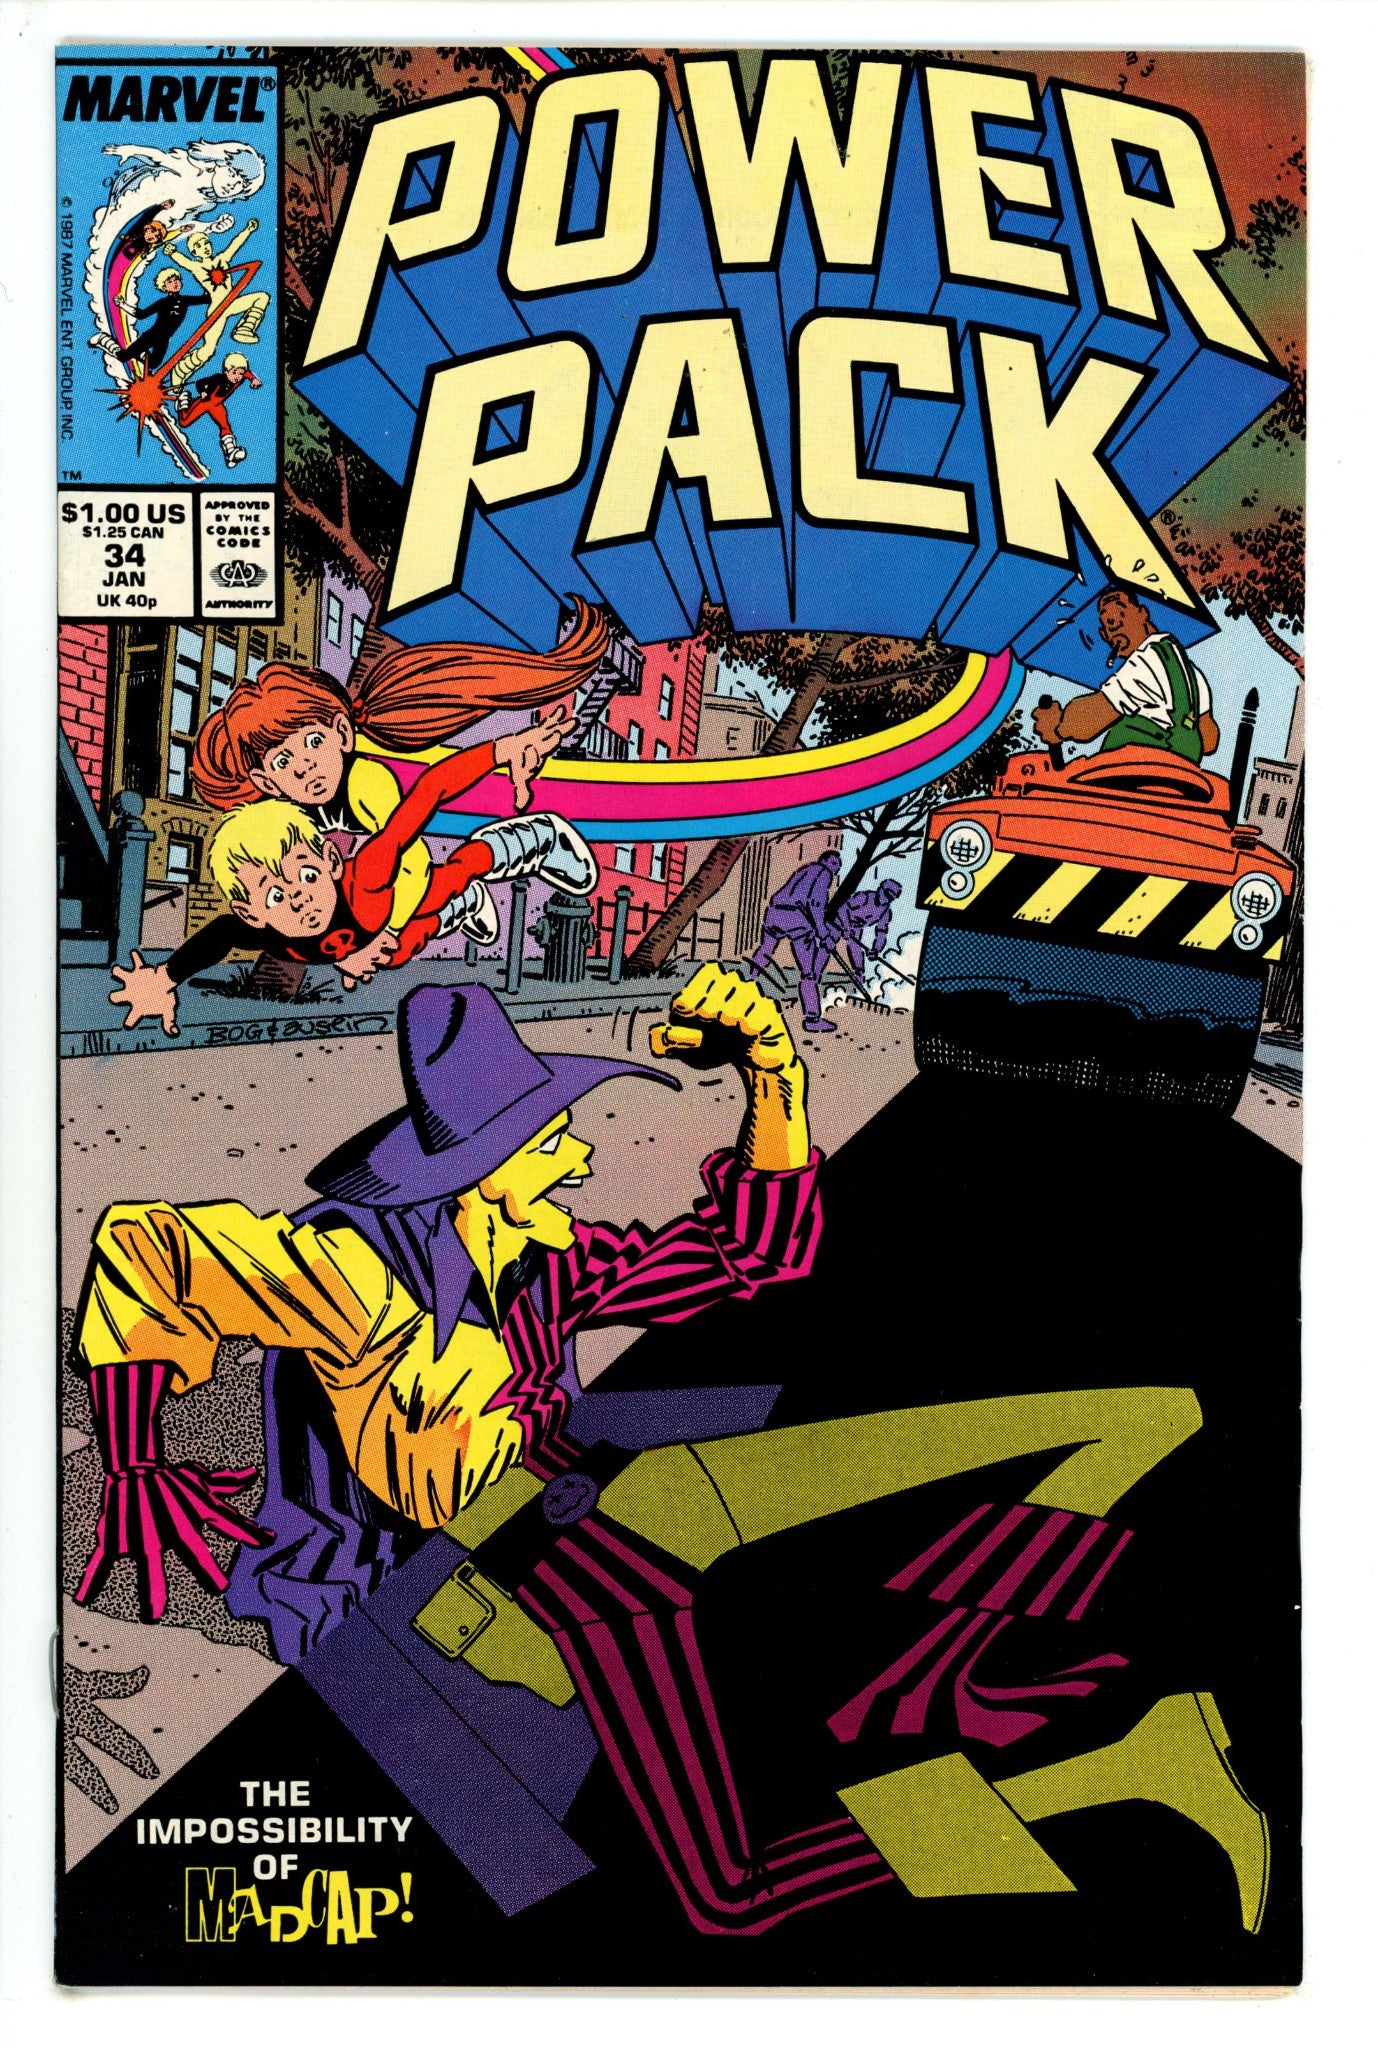 Power Pack Vol 1 34 (1988)